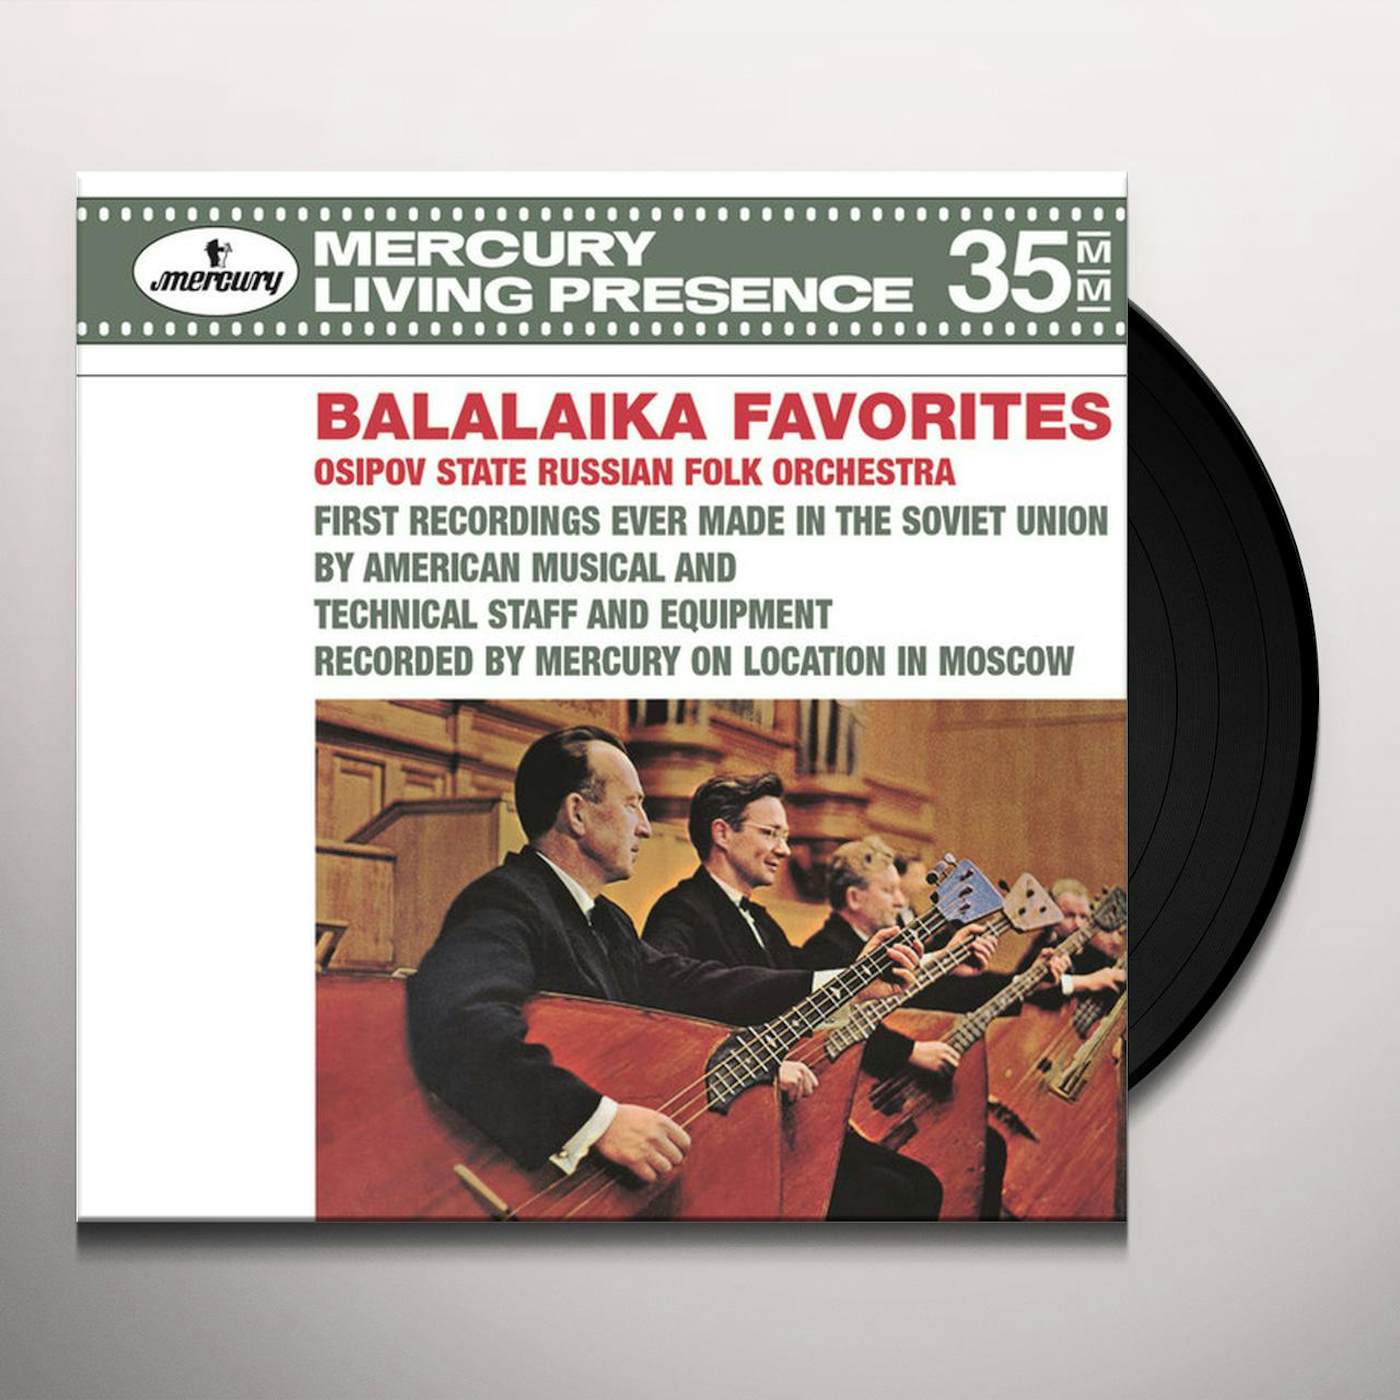 GNUTOV / OSIPOV STATE RUSSIAN FOLK ORCHESTRA BALALAIKA FAVOURITES Vinyl Record